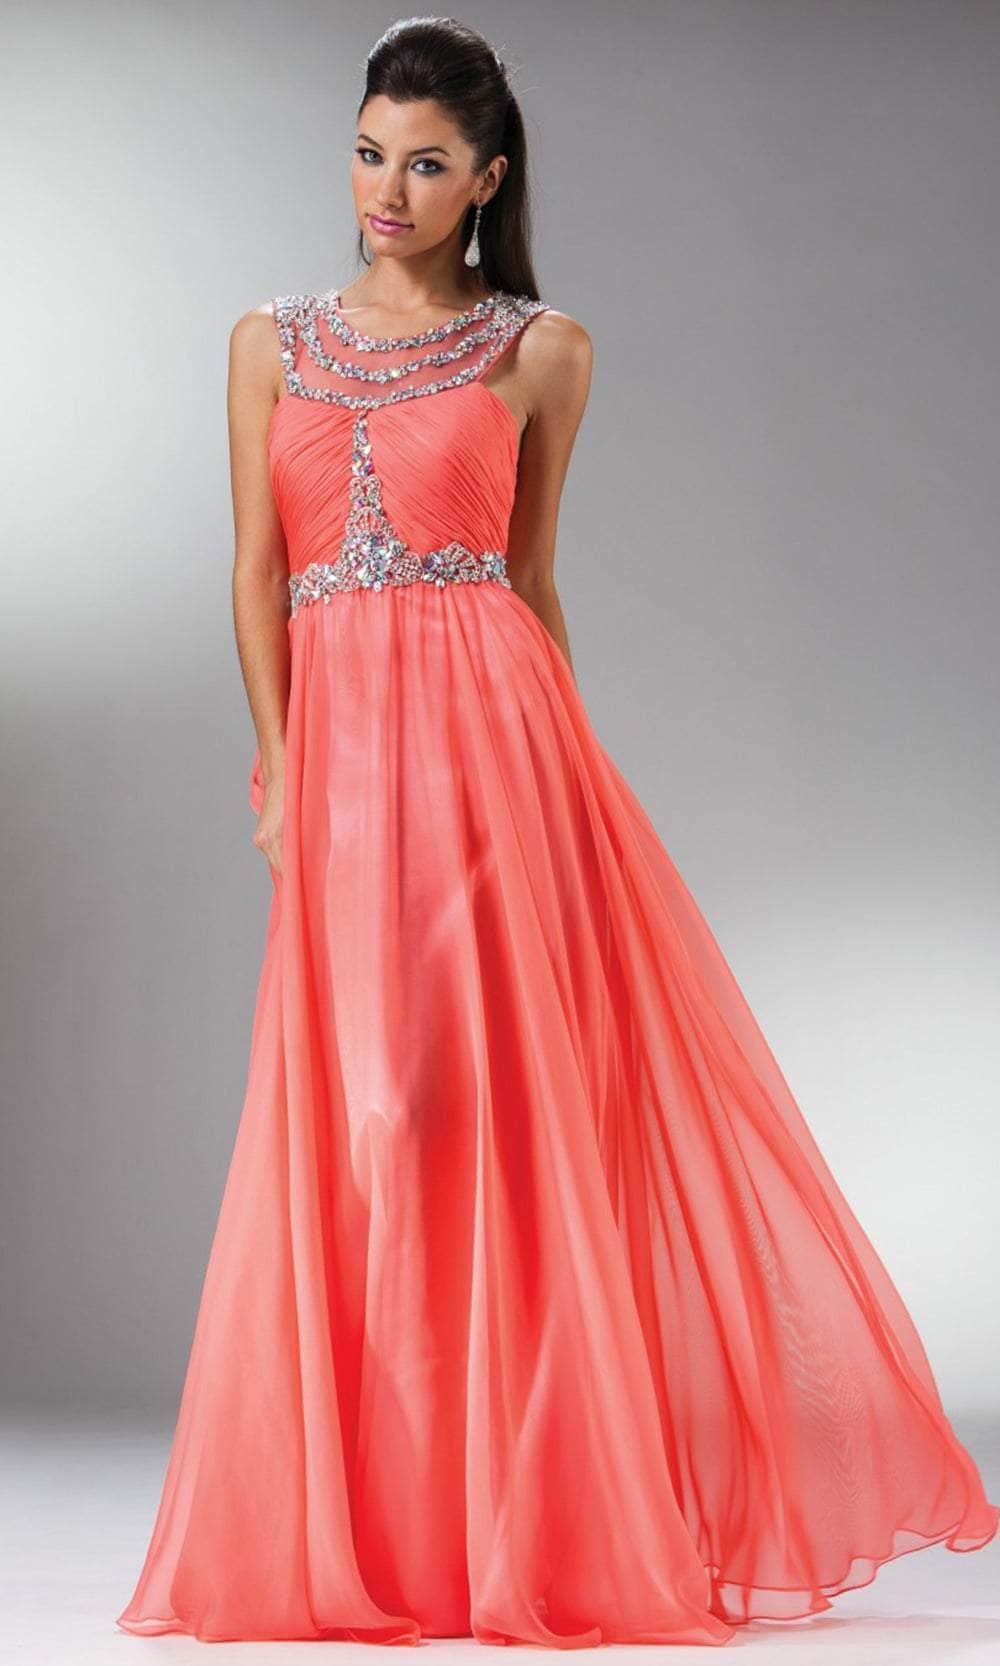 Image of Ladivine 7935 - Jewel Adorned Prom Dress